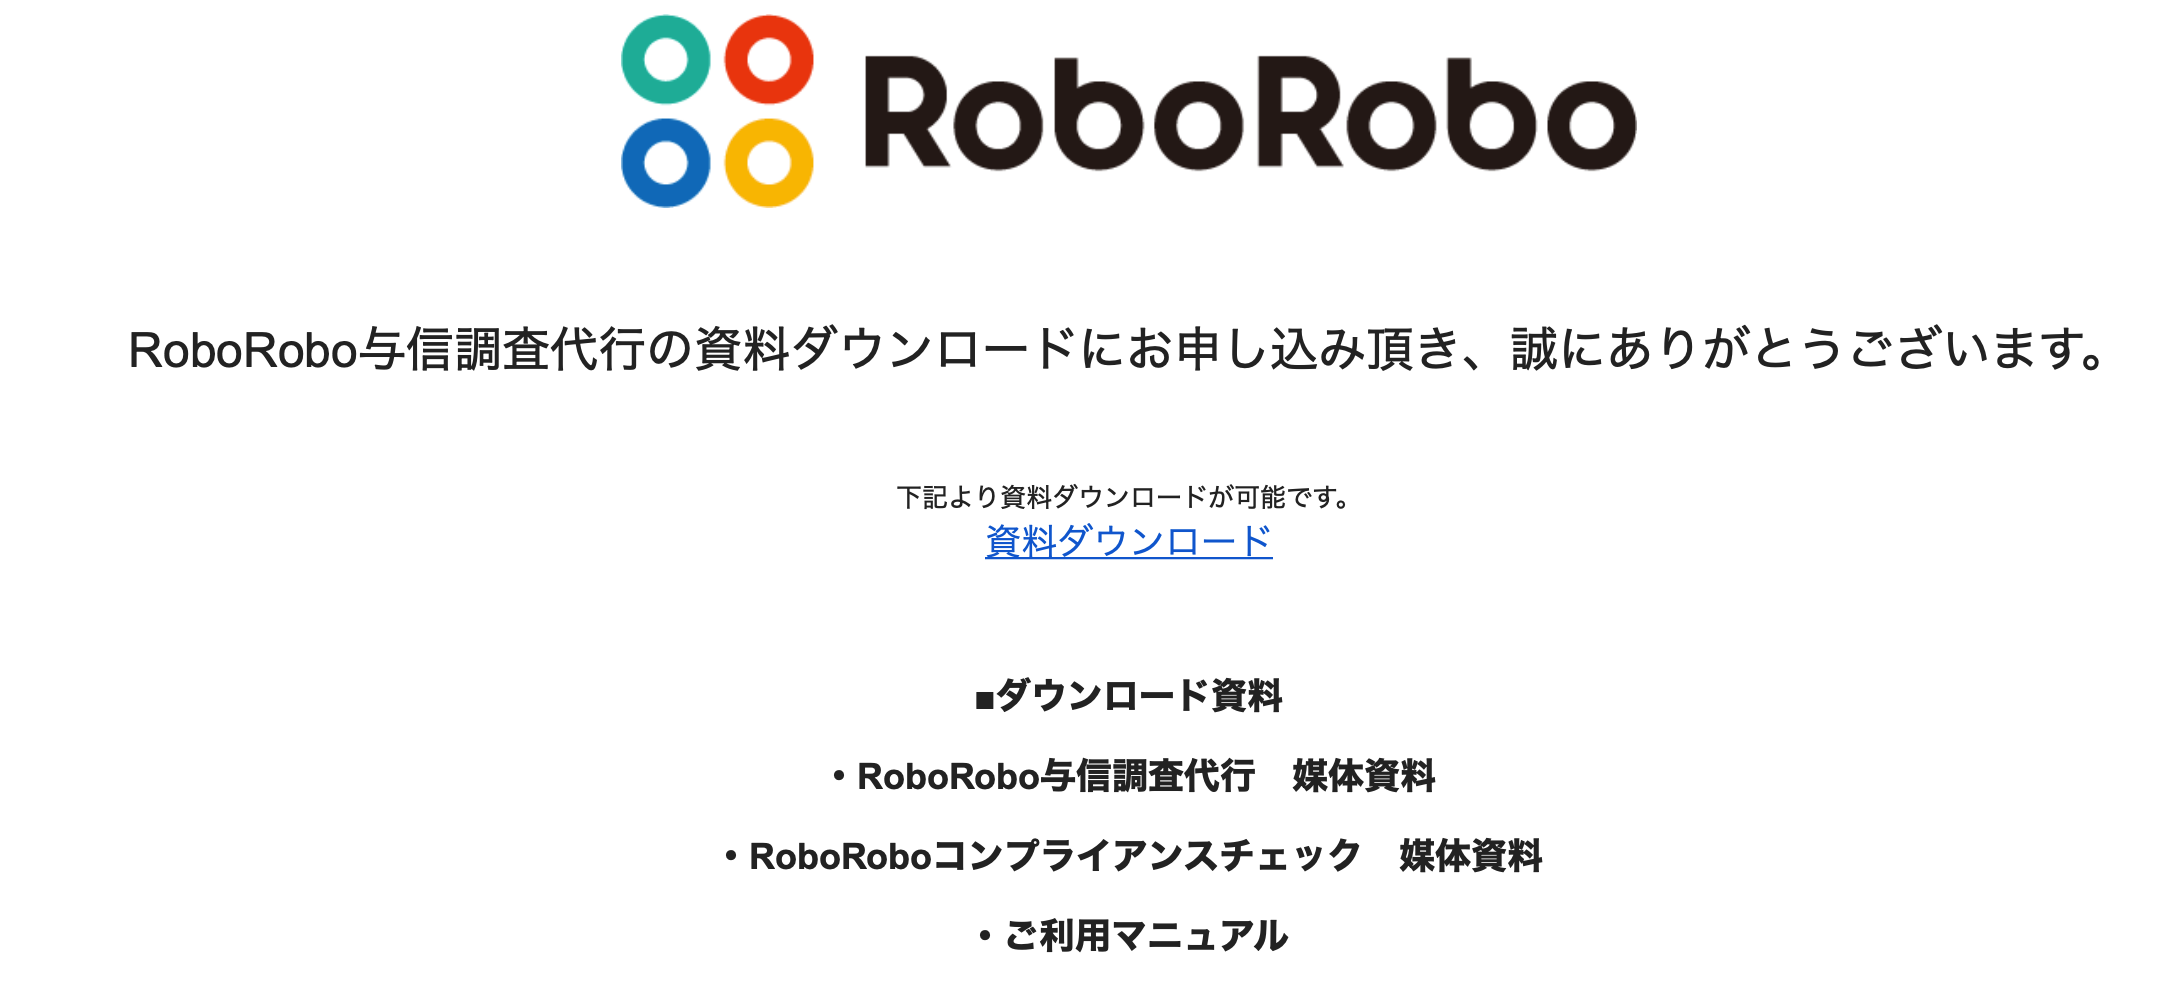 roborobo与信調査代行の無料資料請求の申し込み方法_届いたメールから資料をダウンロードする